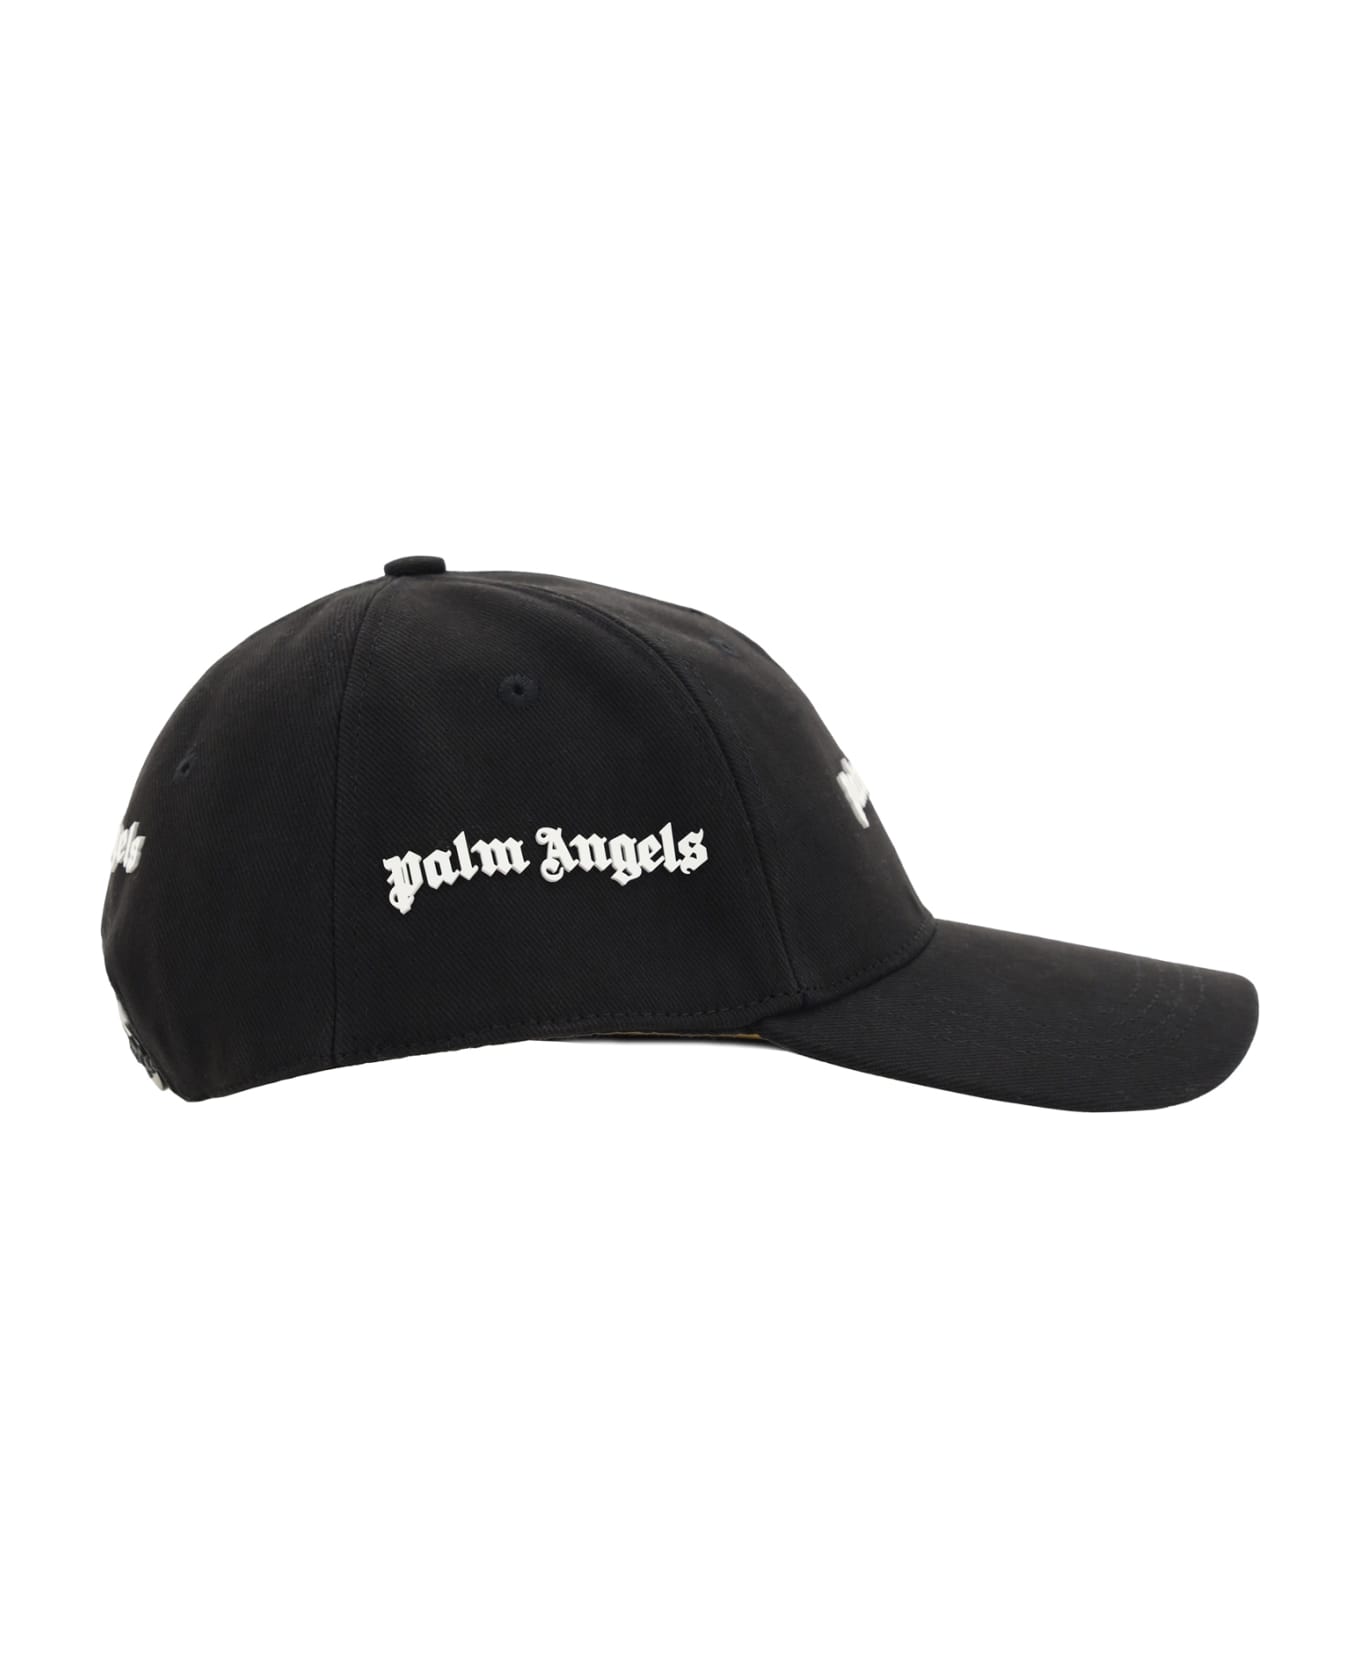 Palm Angels Baseball Cap - Black Whit 帽子